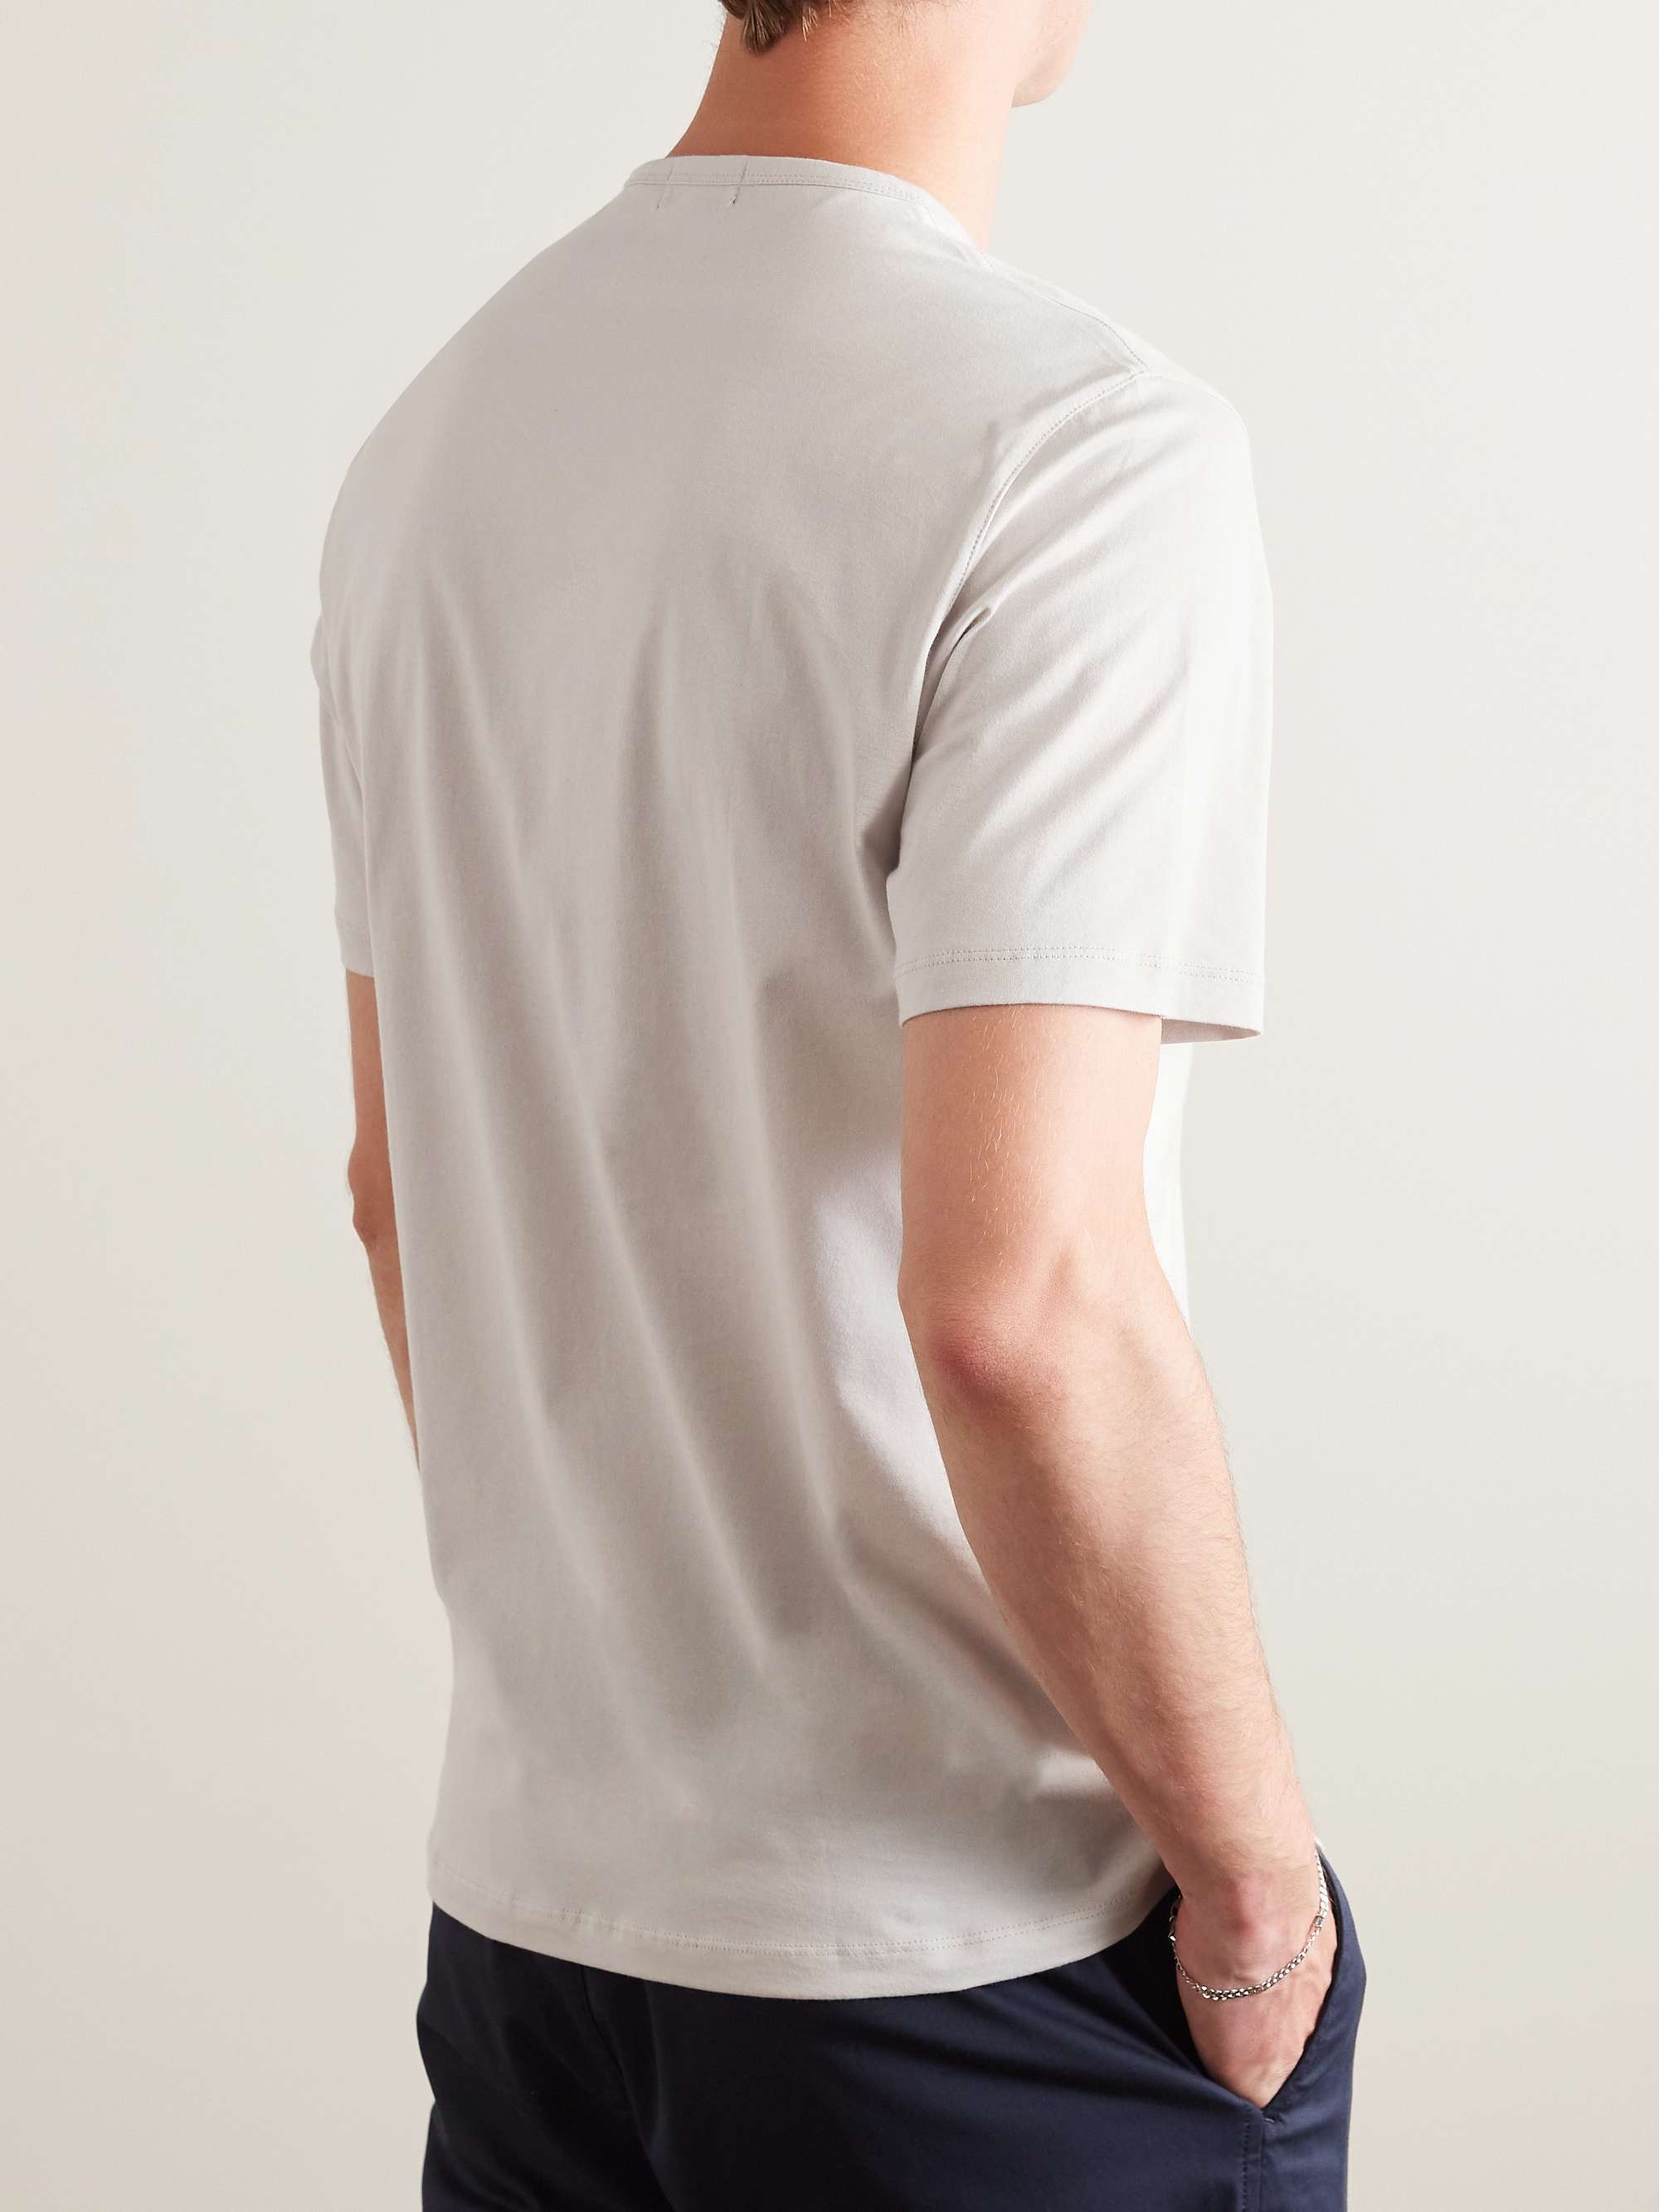 THEORY Precise Cotton-Jersey T-Shirt